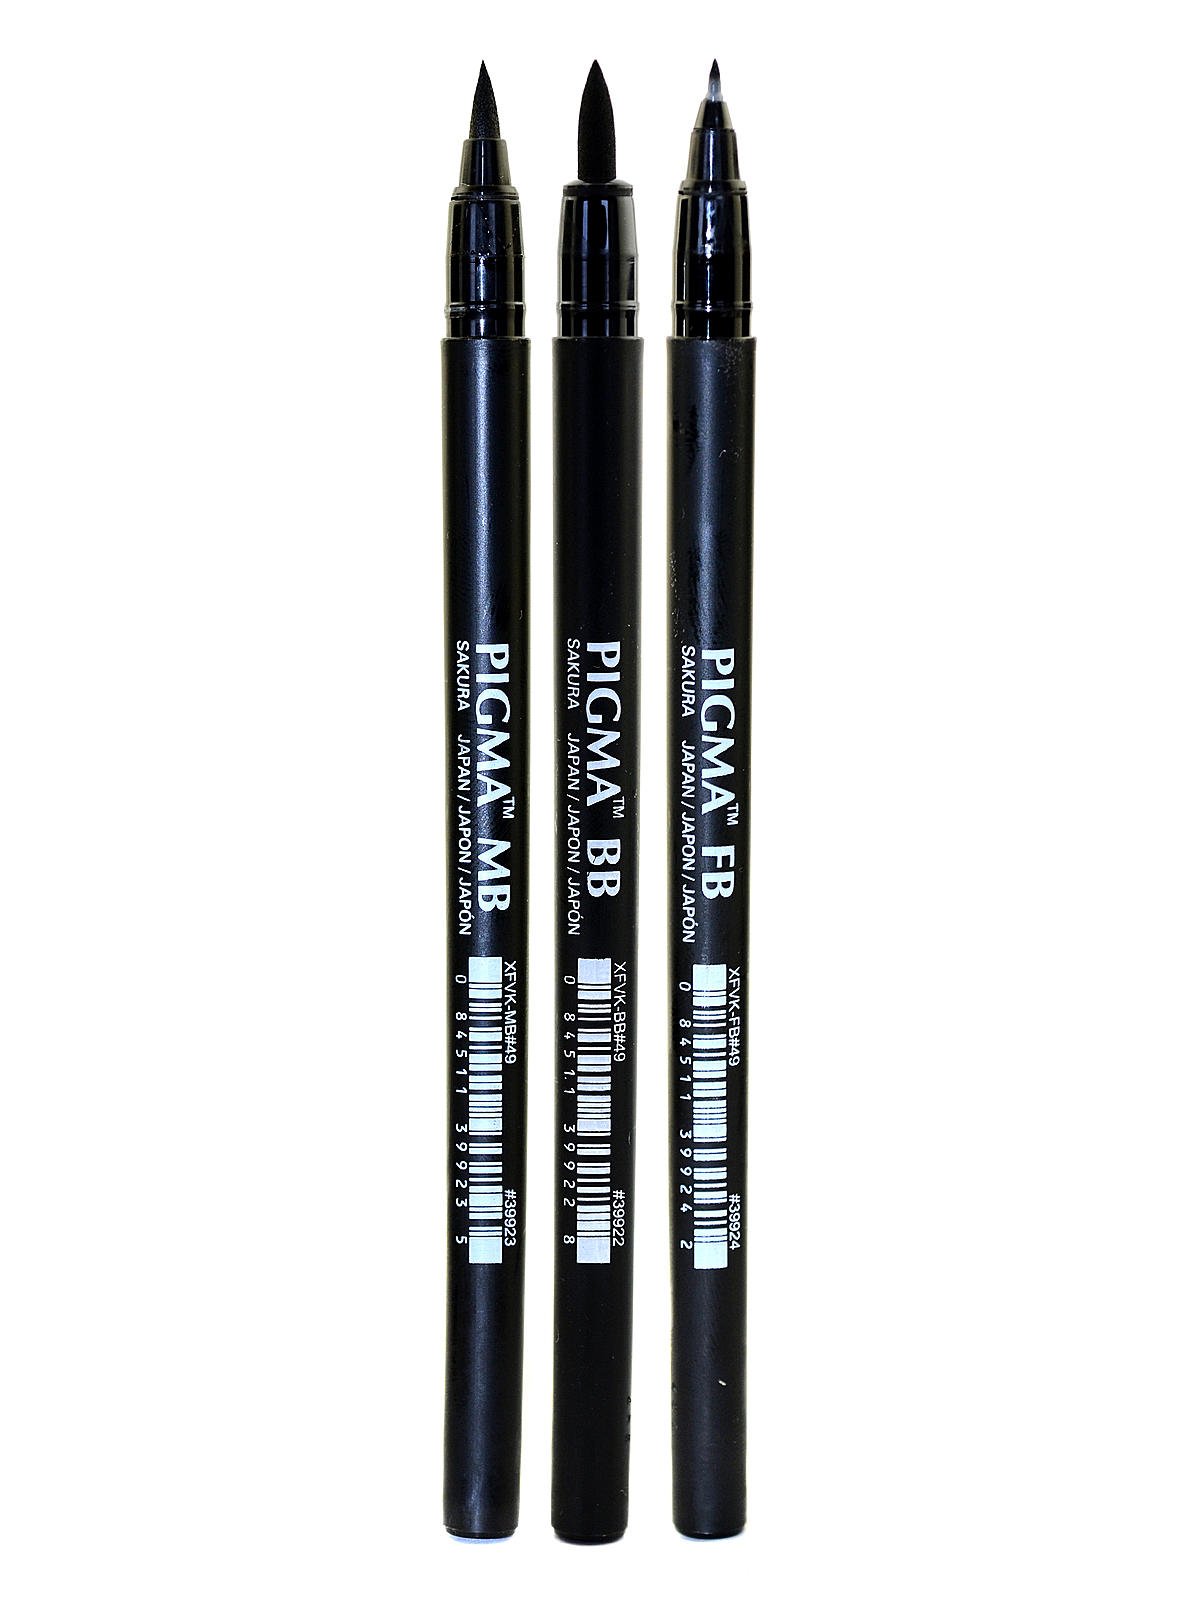 Sakura - Pigma Professional Brush Pens